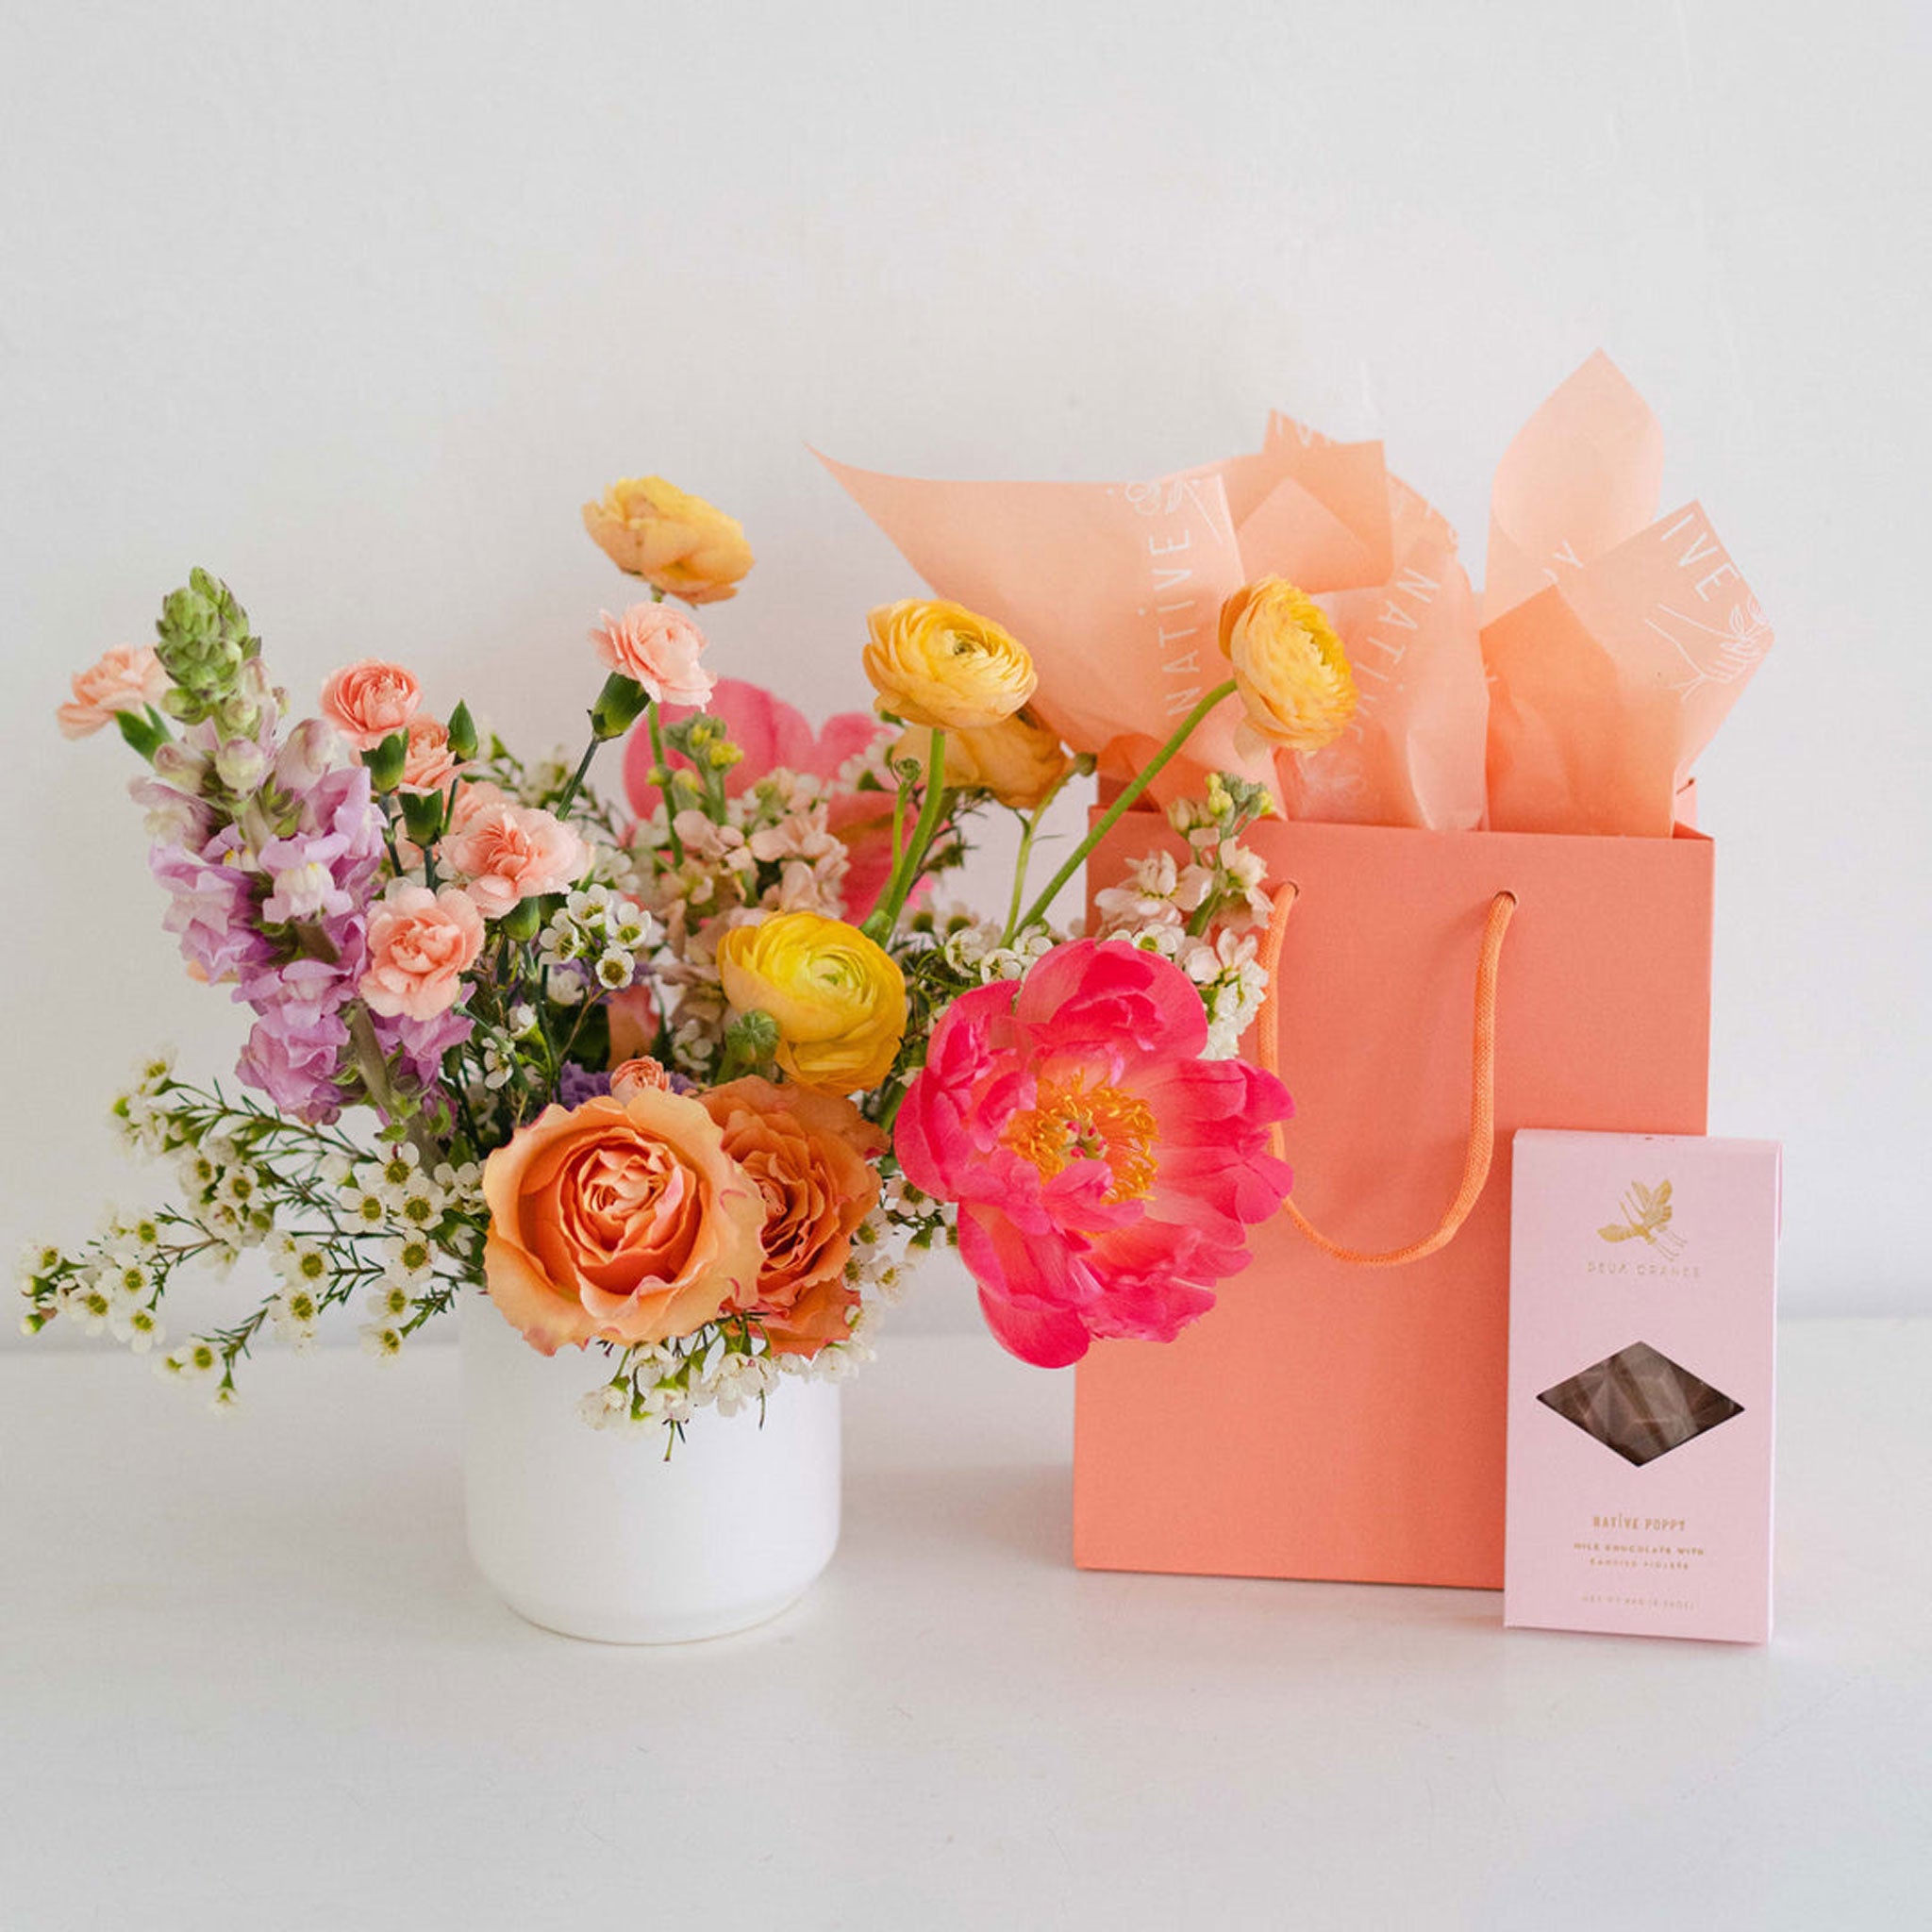 Chocolate gift and fresh flower arrangement